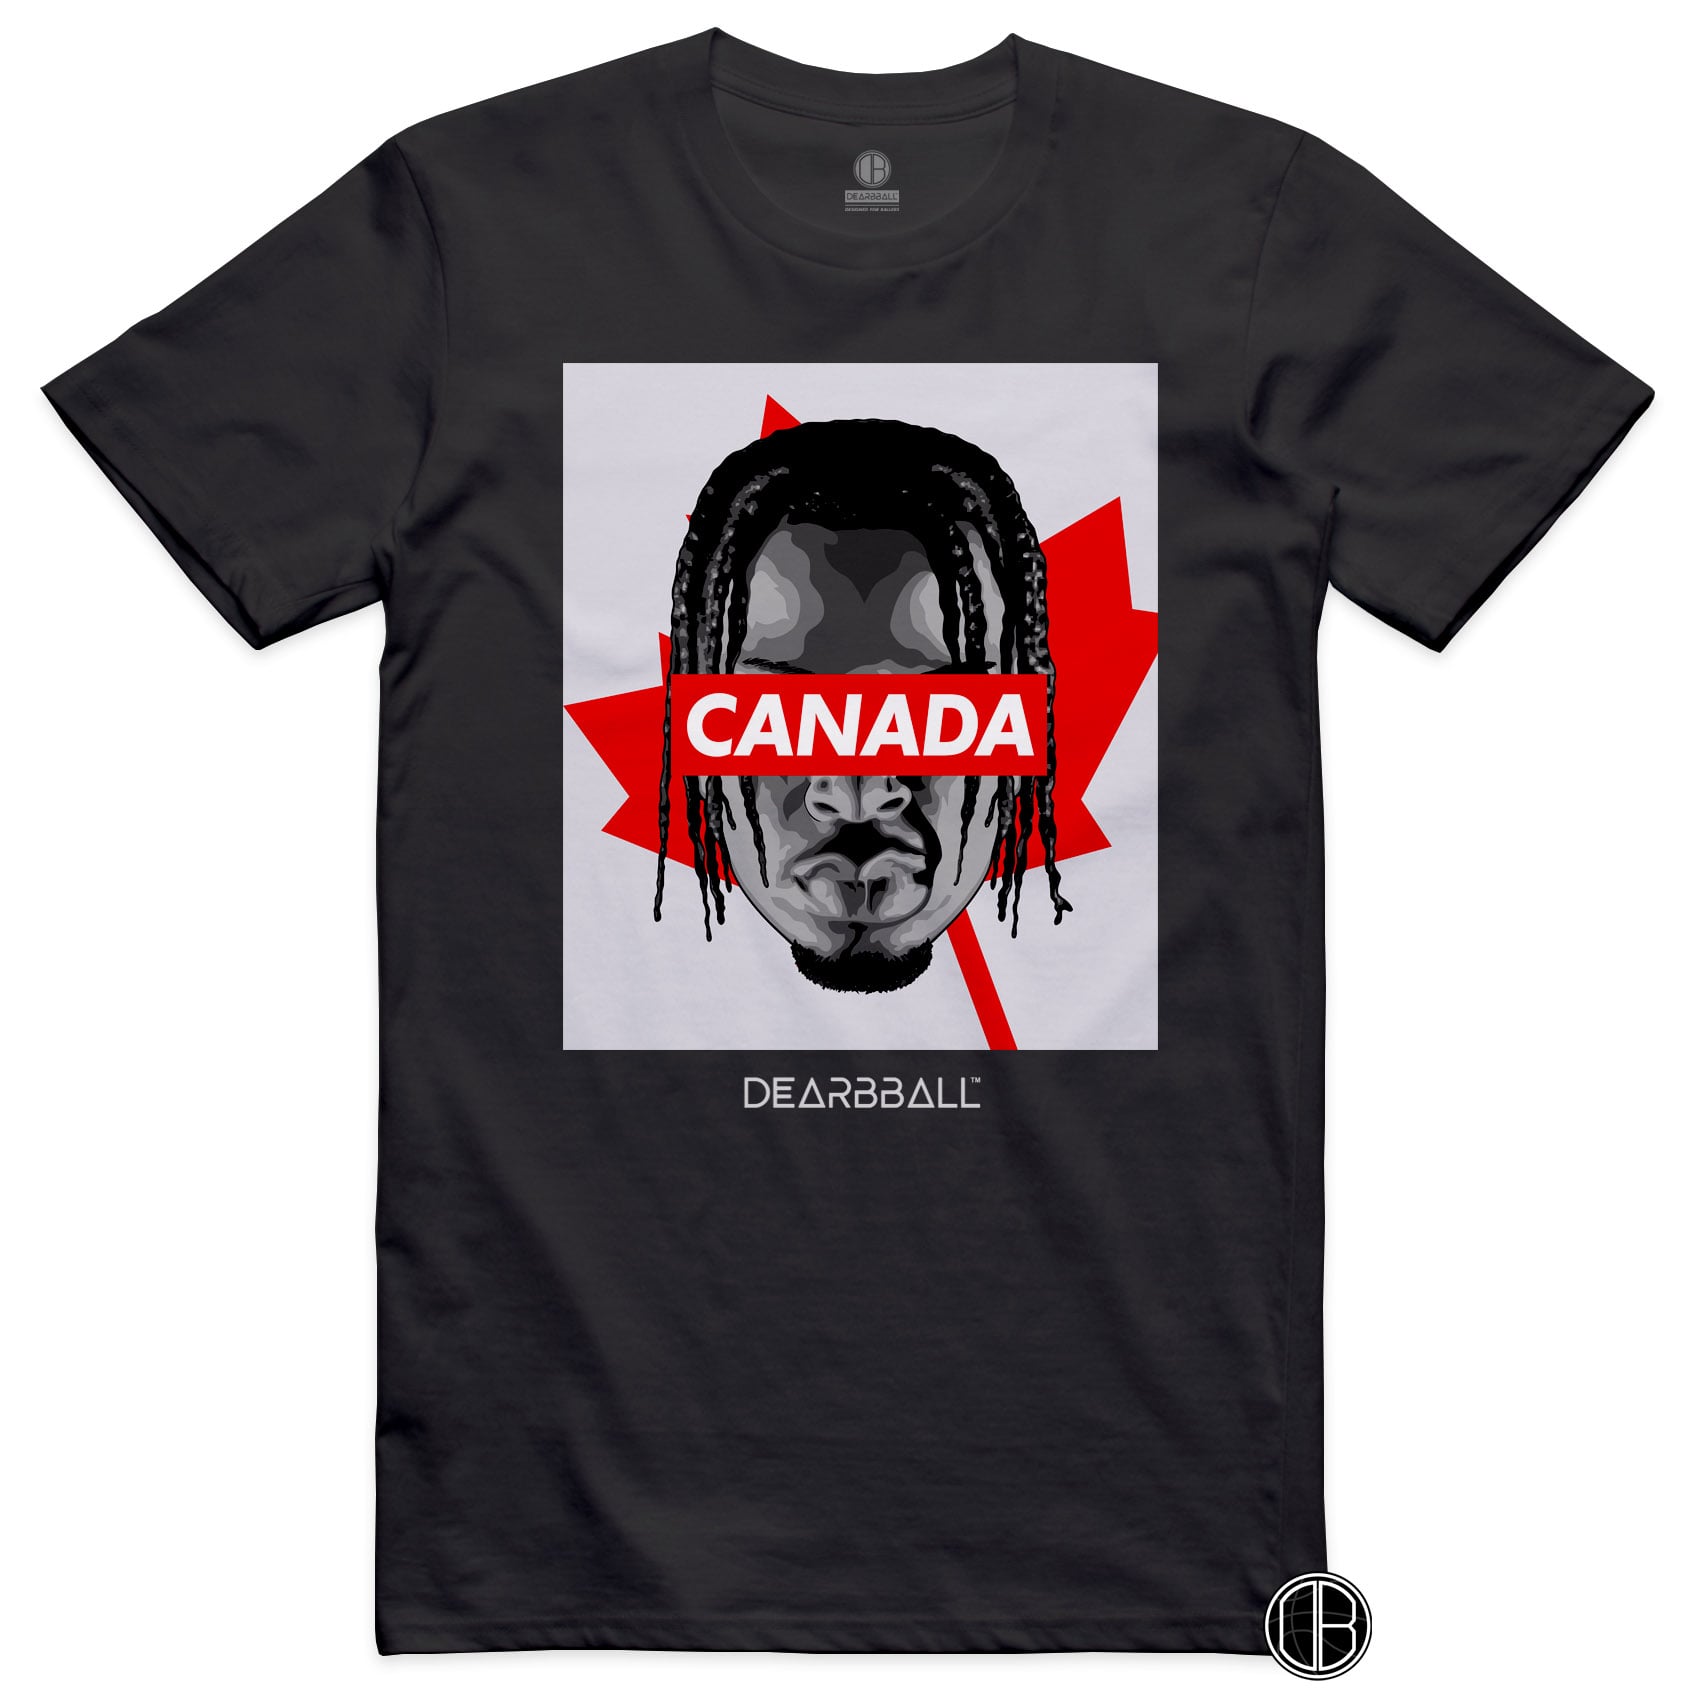 DearBBall T-Shirt - Shai CANADA Maple Edition